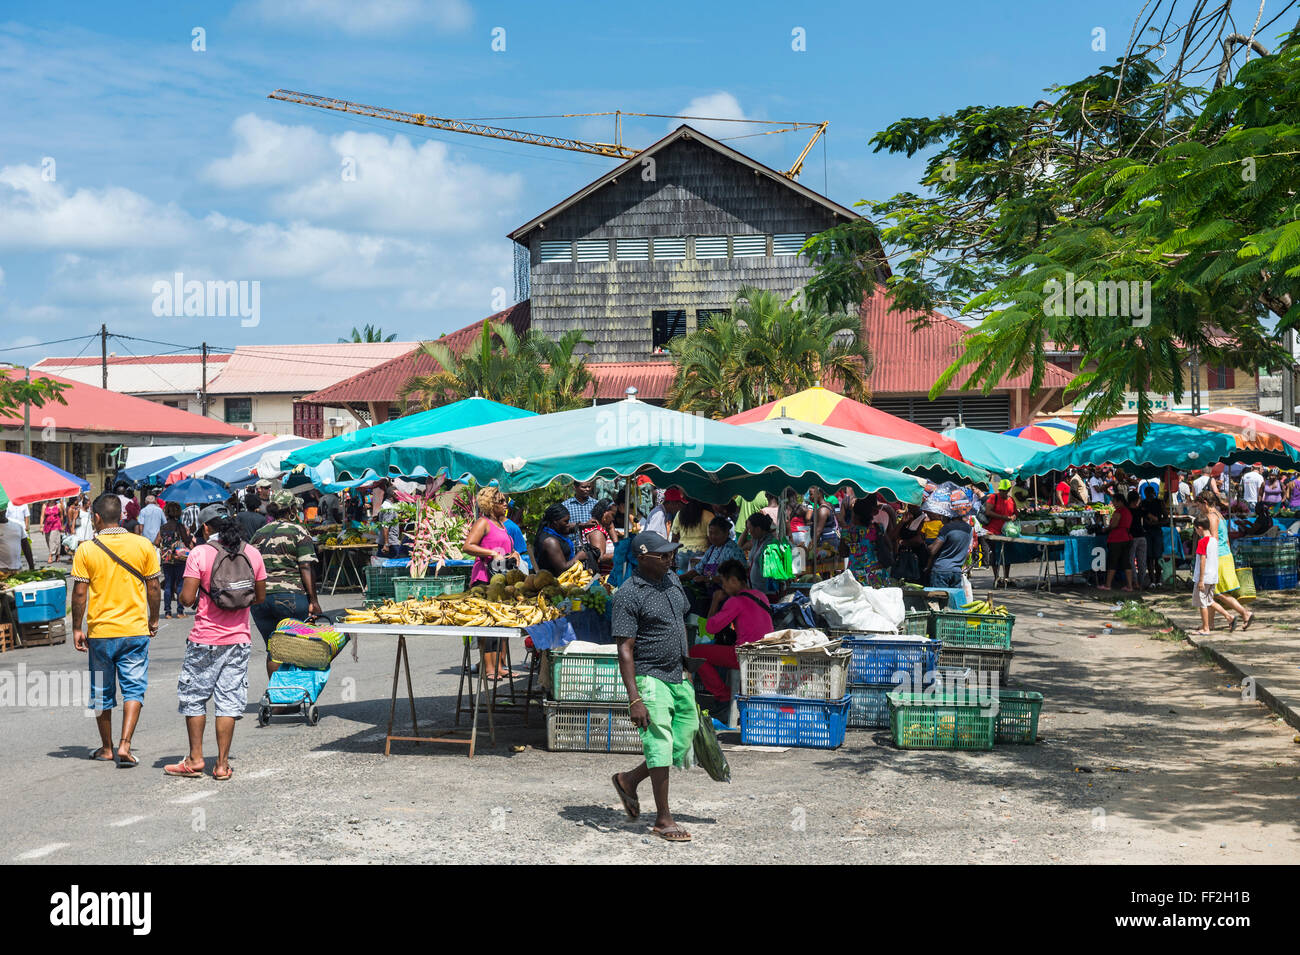 Mercato di San RMaurent du Maroni, Guiana francese, Dipartimento di Francia, Sud America Foto Stock